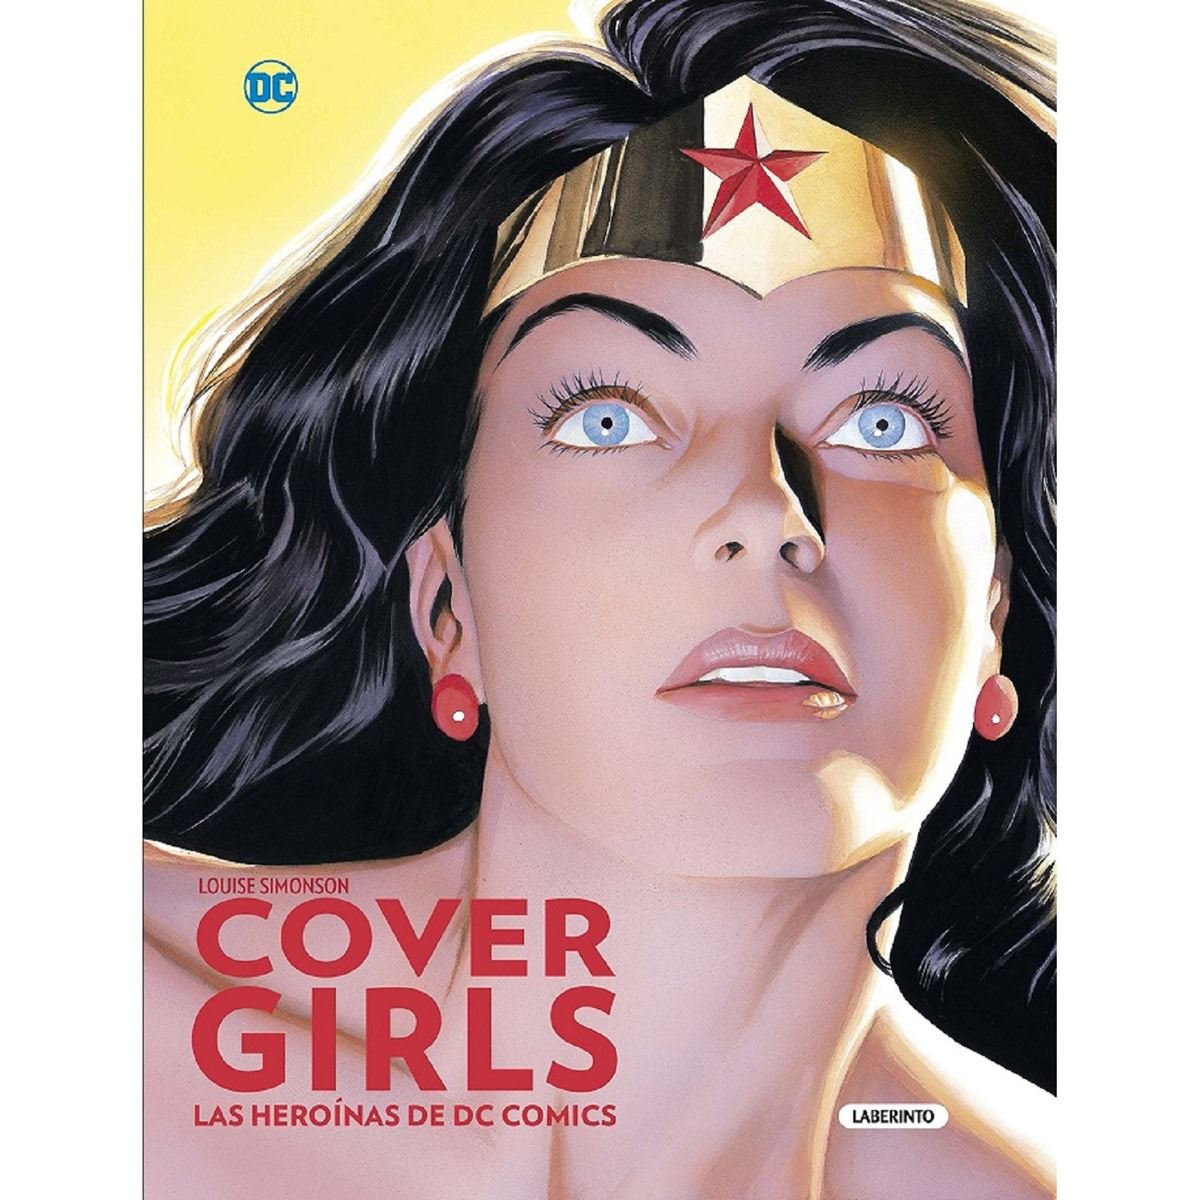 Cover Girls las heroinas de DC comisc